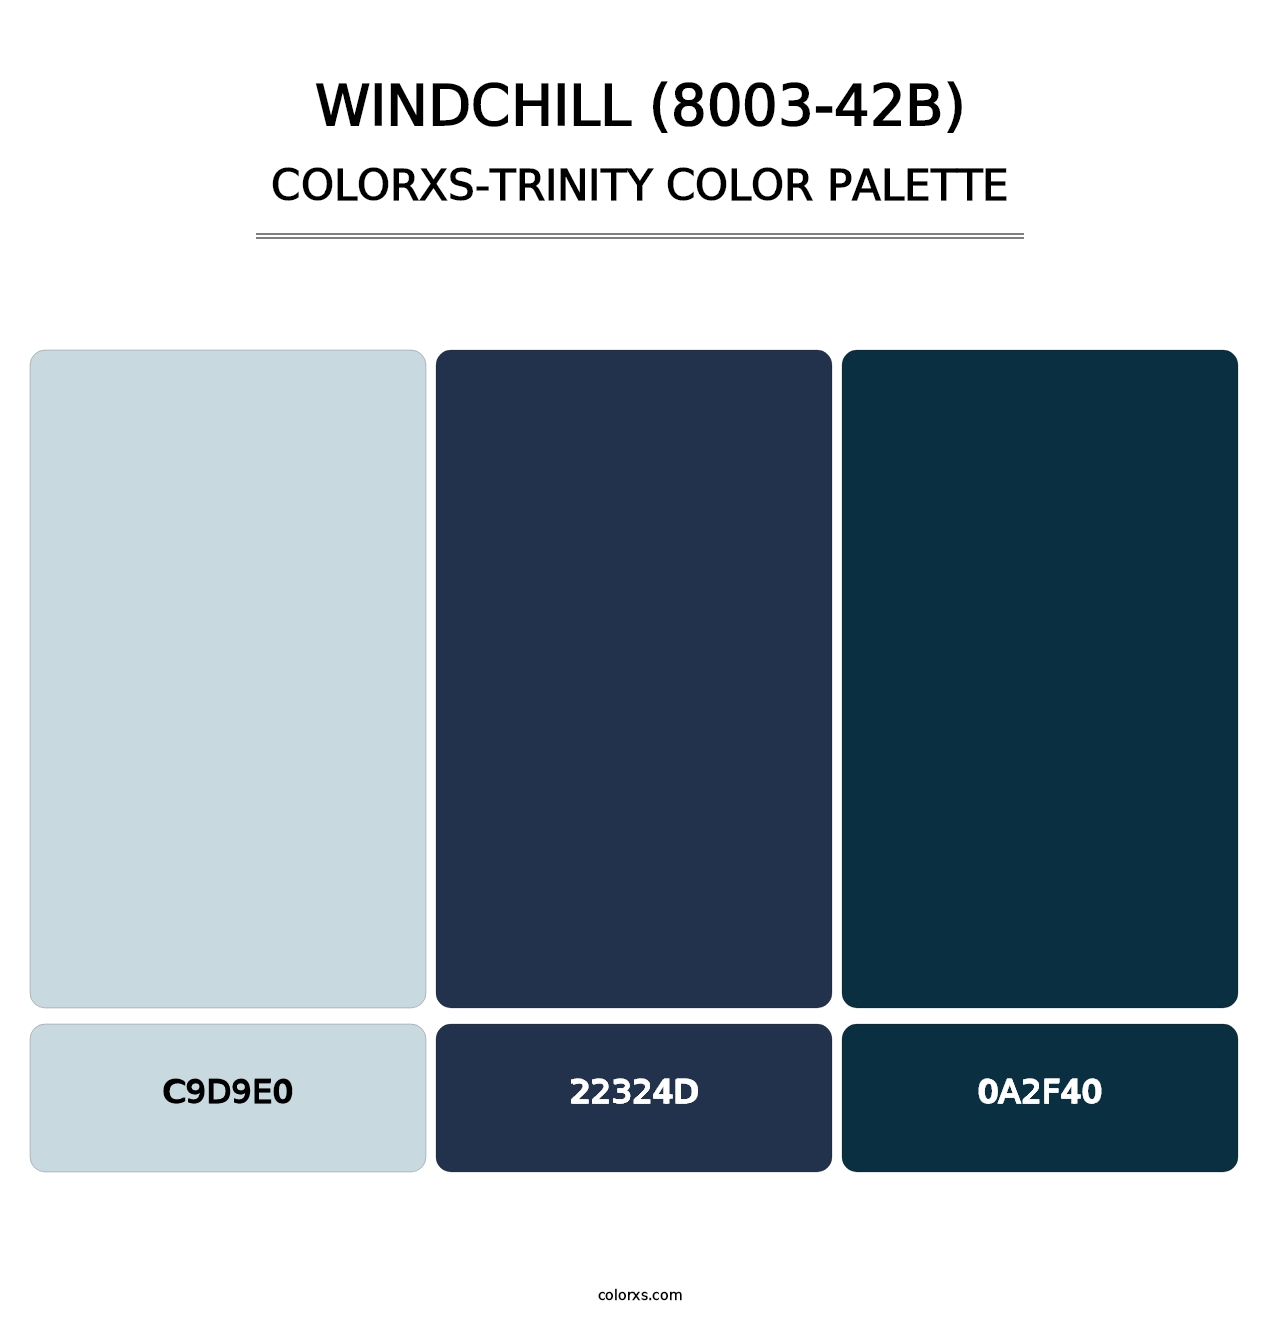 Windchill (8003-42B) - Colorxs Trinity Palette